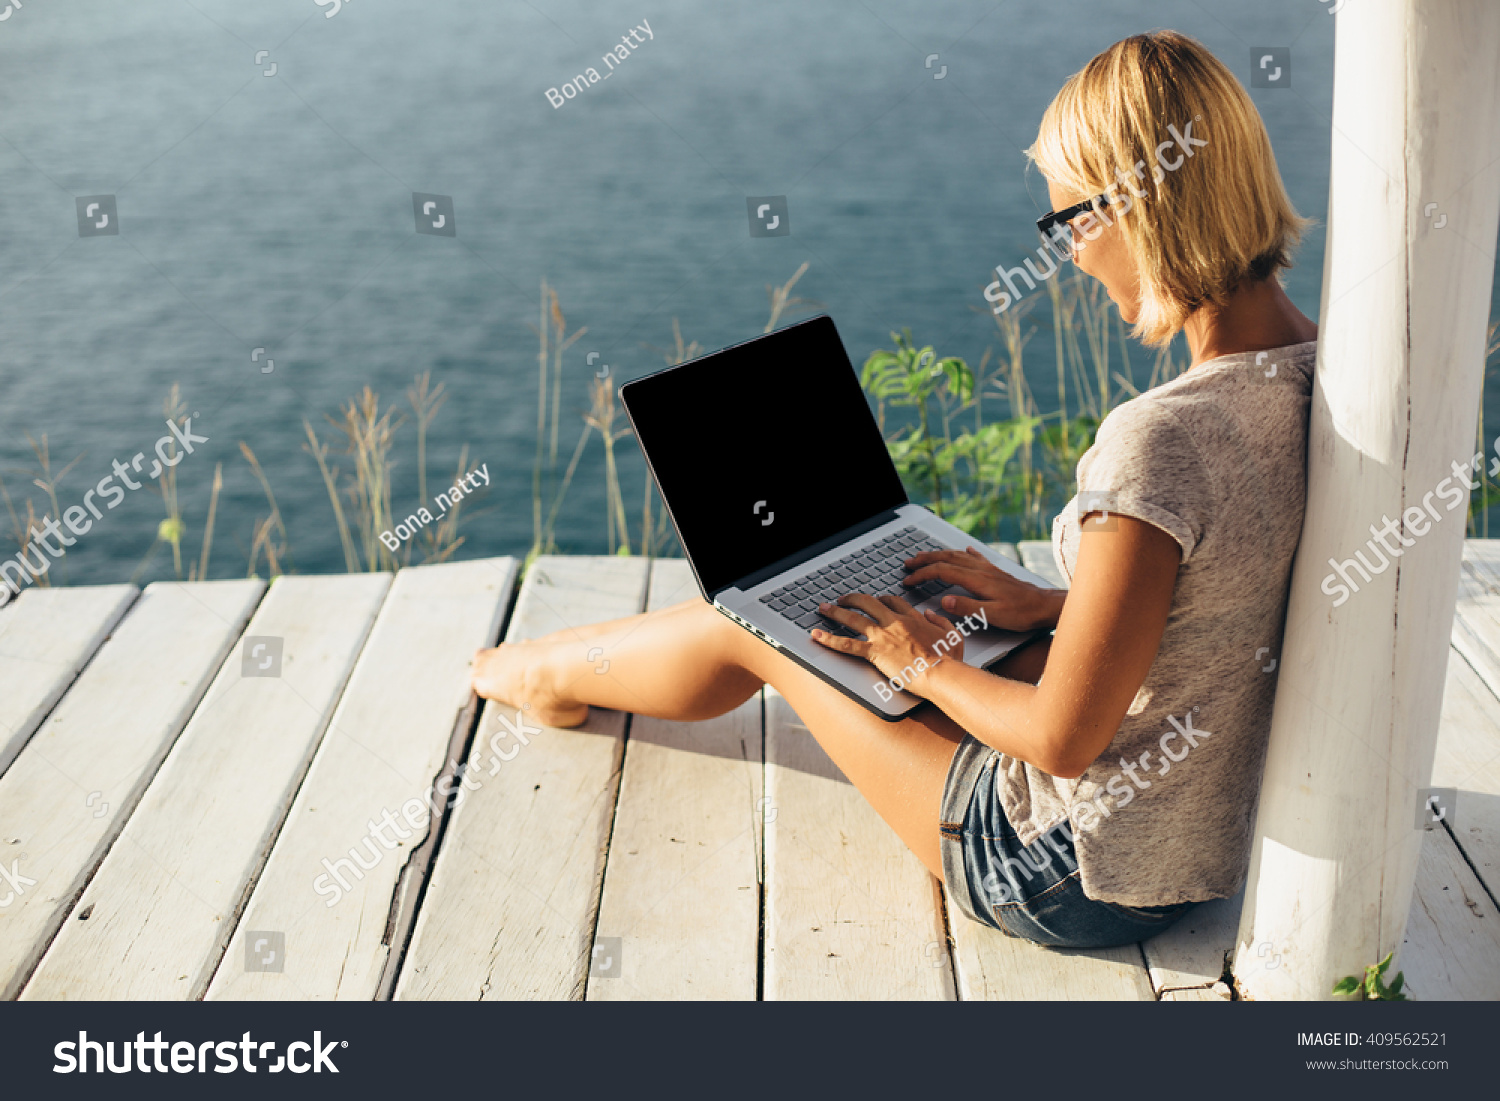 Фрилансер подросток. Девушка с ноутом. Девушка с ноутбуком. Девушка за ноутом. Девушка за ноутбуком.